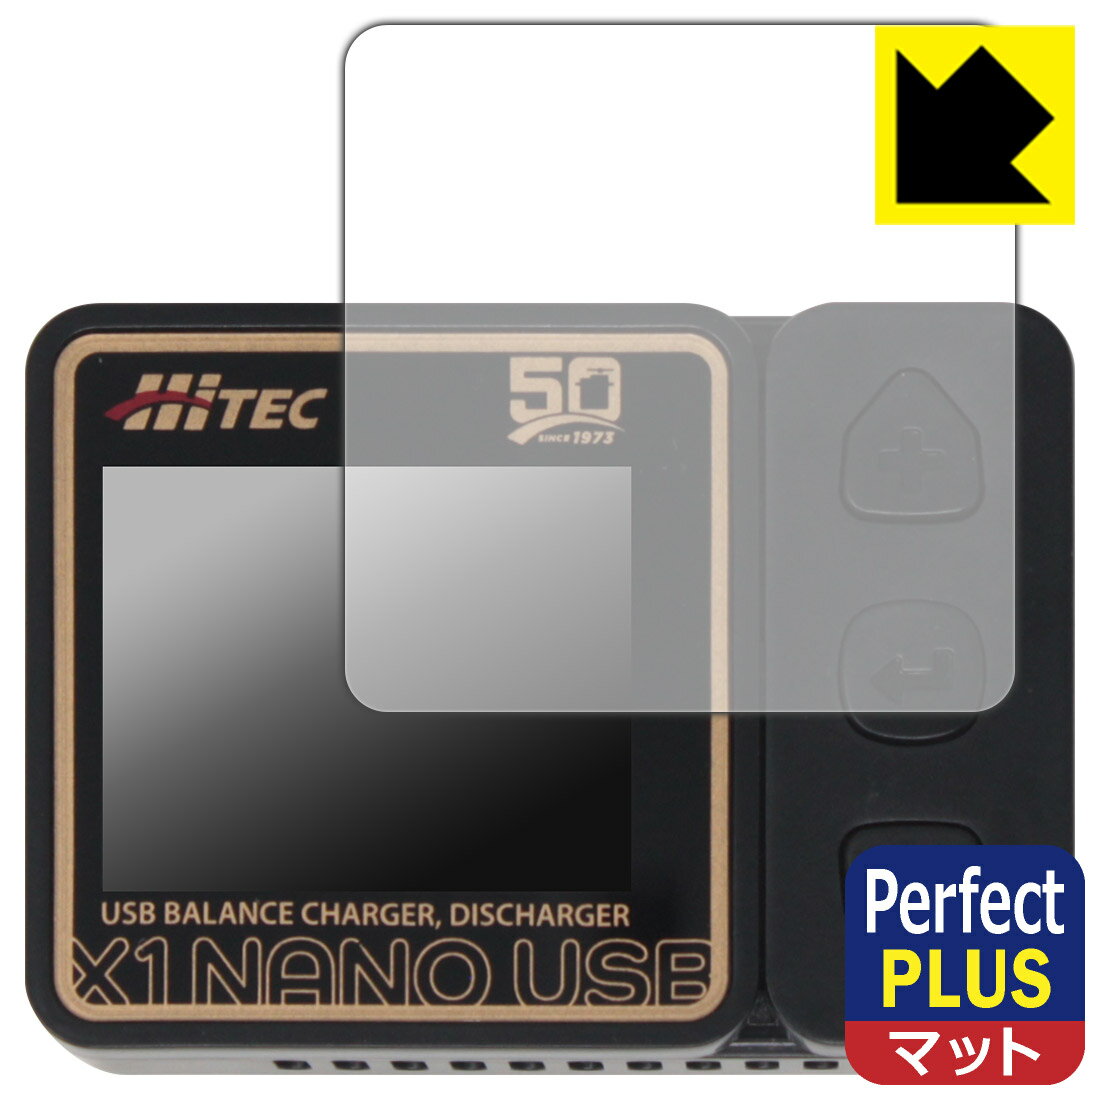 HiTEC X1 NANO USB 用 Perfect Shield Plus【反射低減】保護フィルム 日本製 自社製造直販